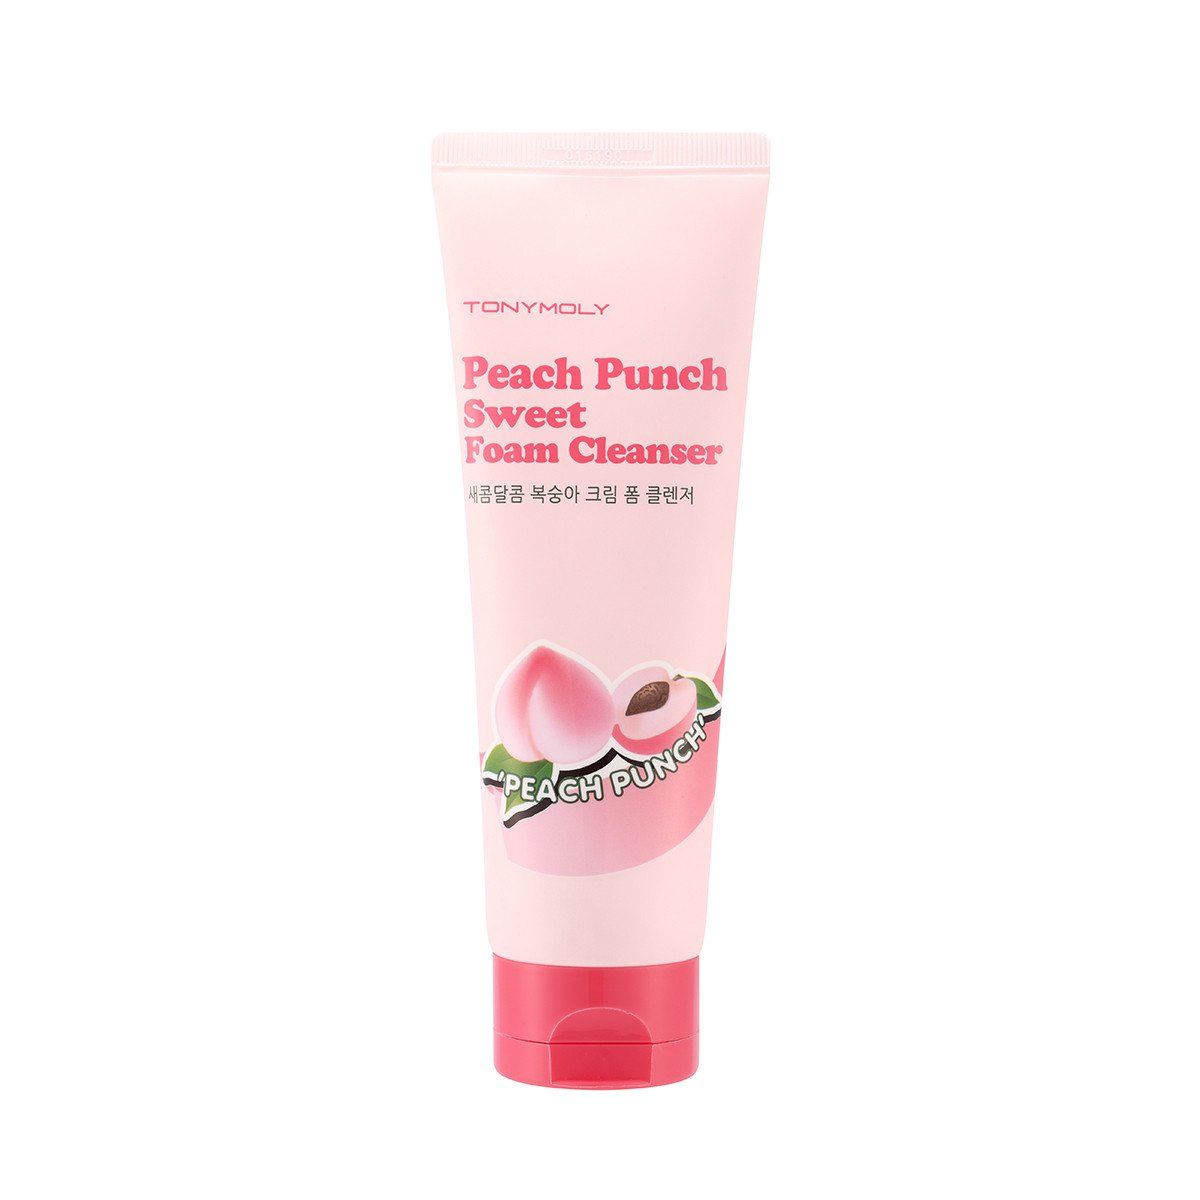 foam-cleanser-TONYMOLY Peach Punch Sweet Foam Cleanser